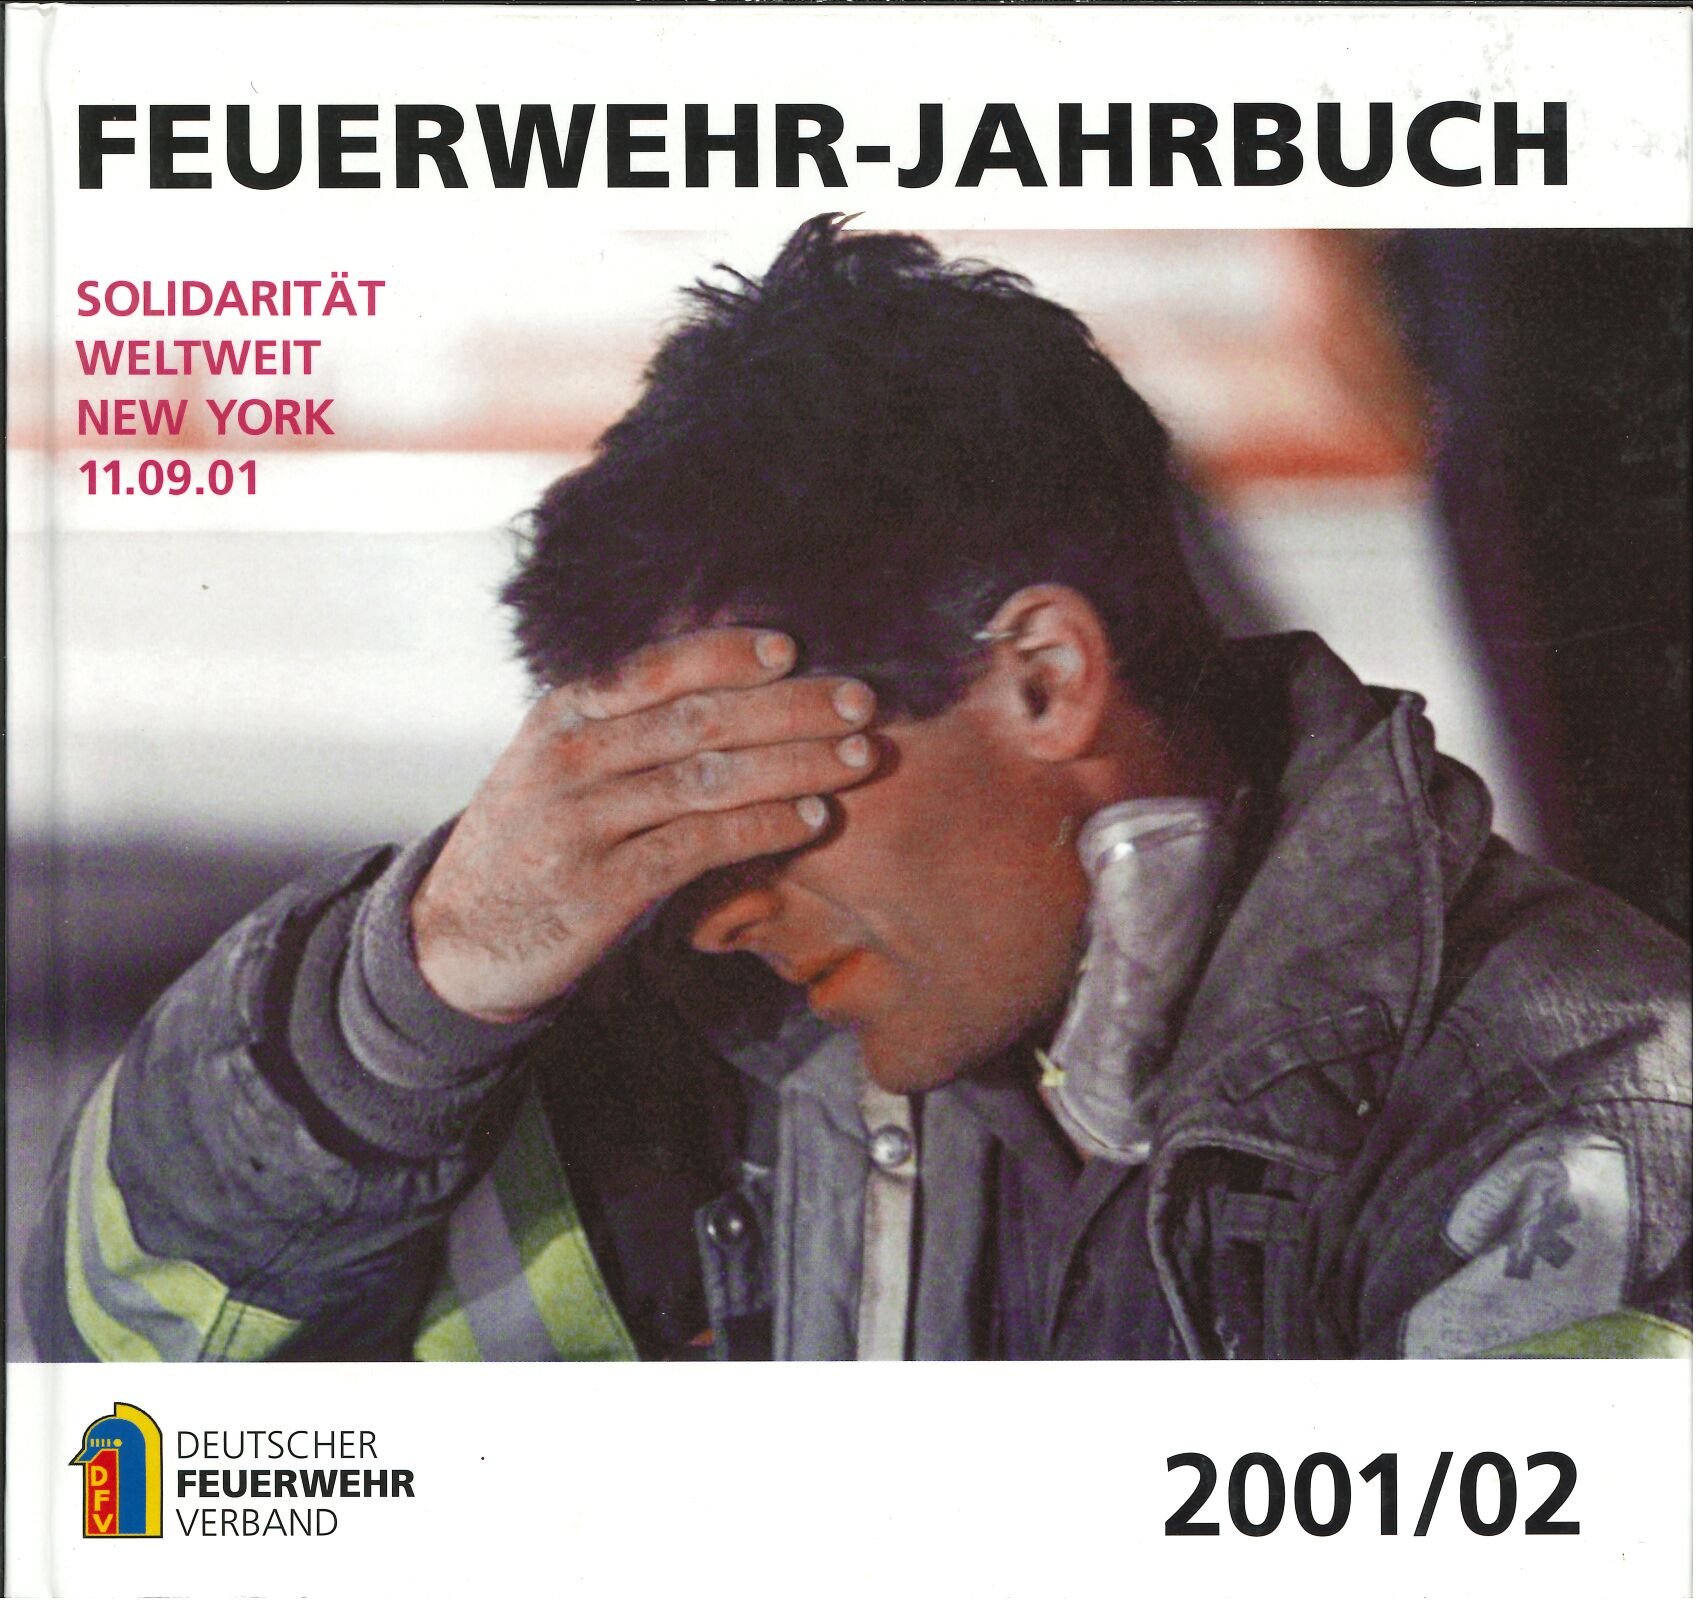 Feuerwehr-Jahrbuch 2001/02 (Feuerwehrmuseum Grethen CC BY-NC-SA)